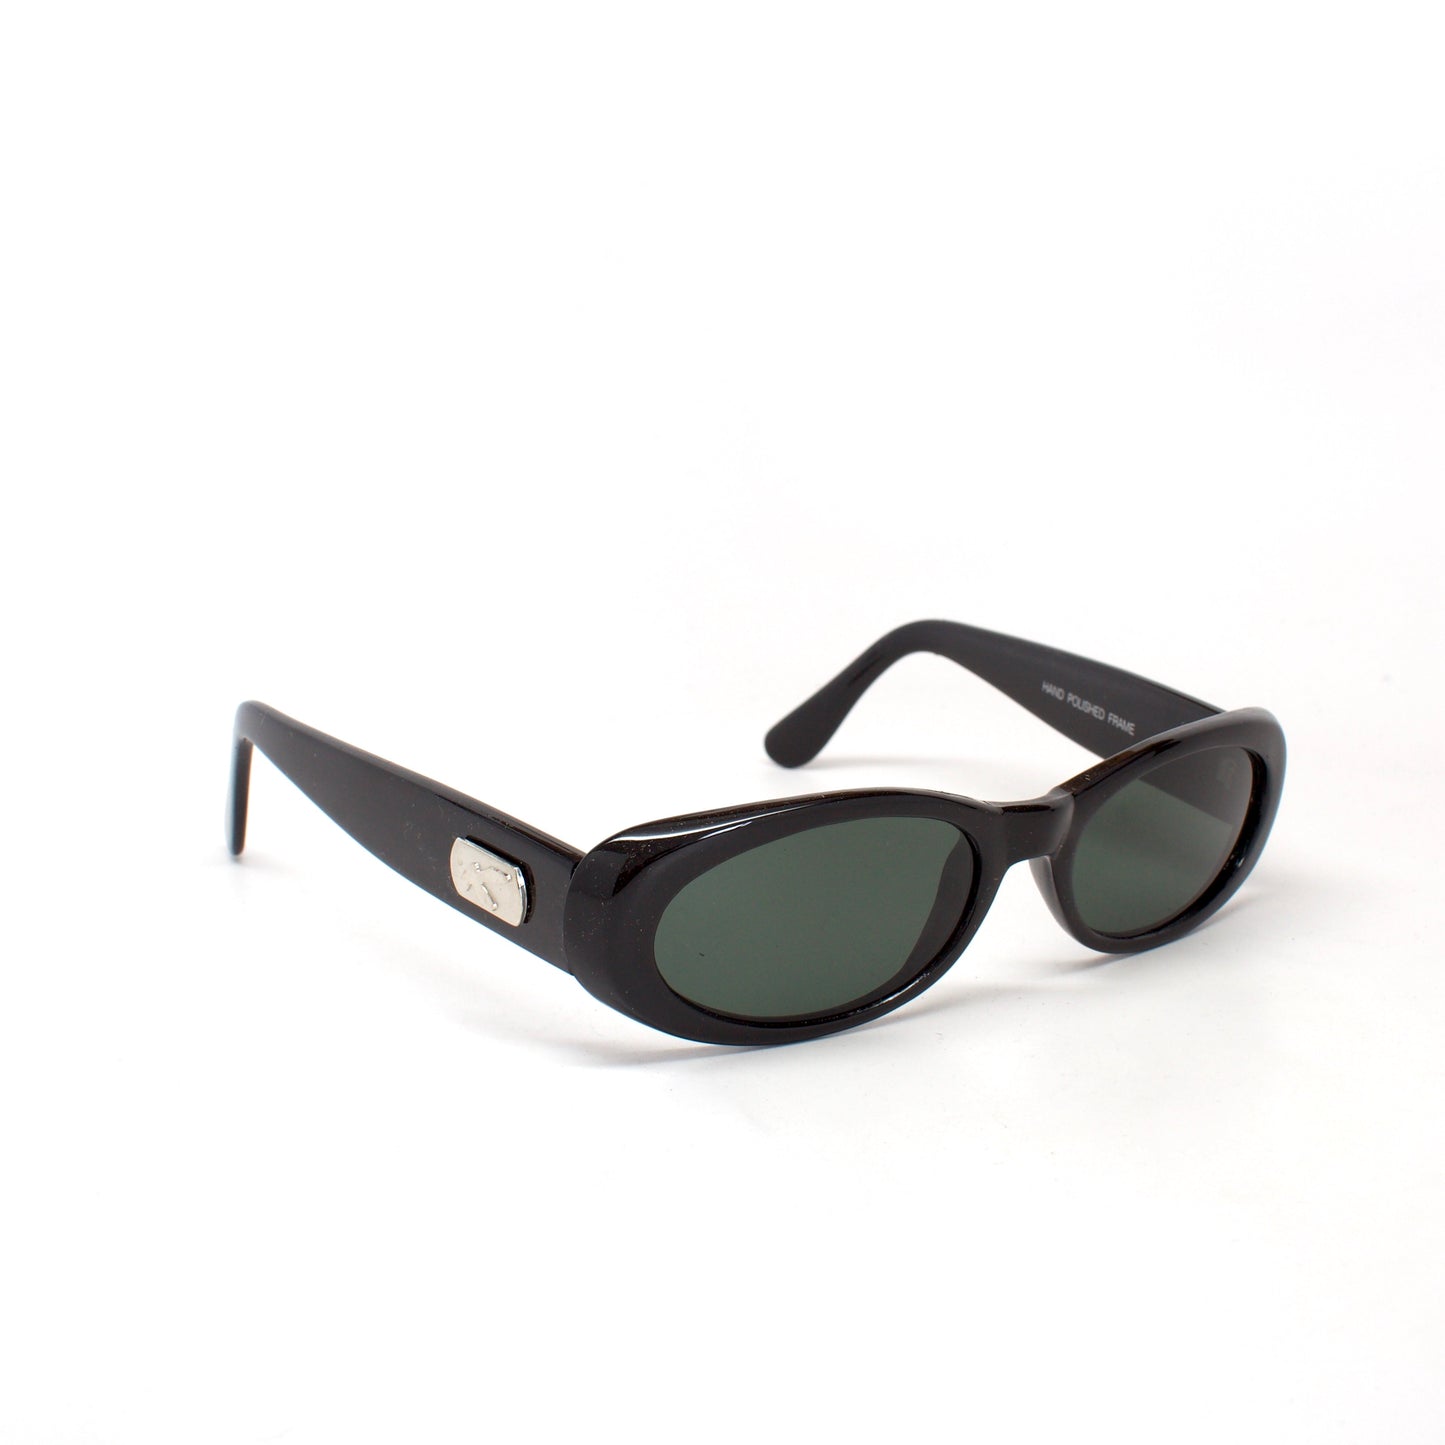 Vintage Standard Size 90s Mod Original Laine Oval Sunglasses - Black